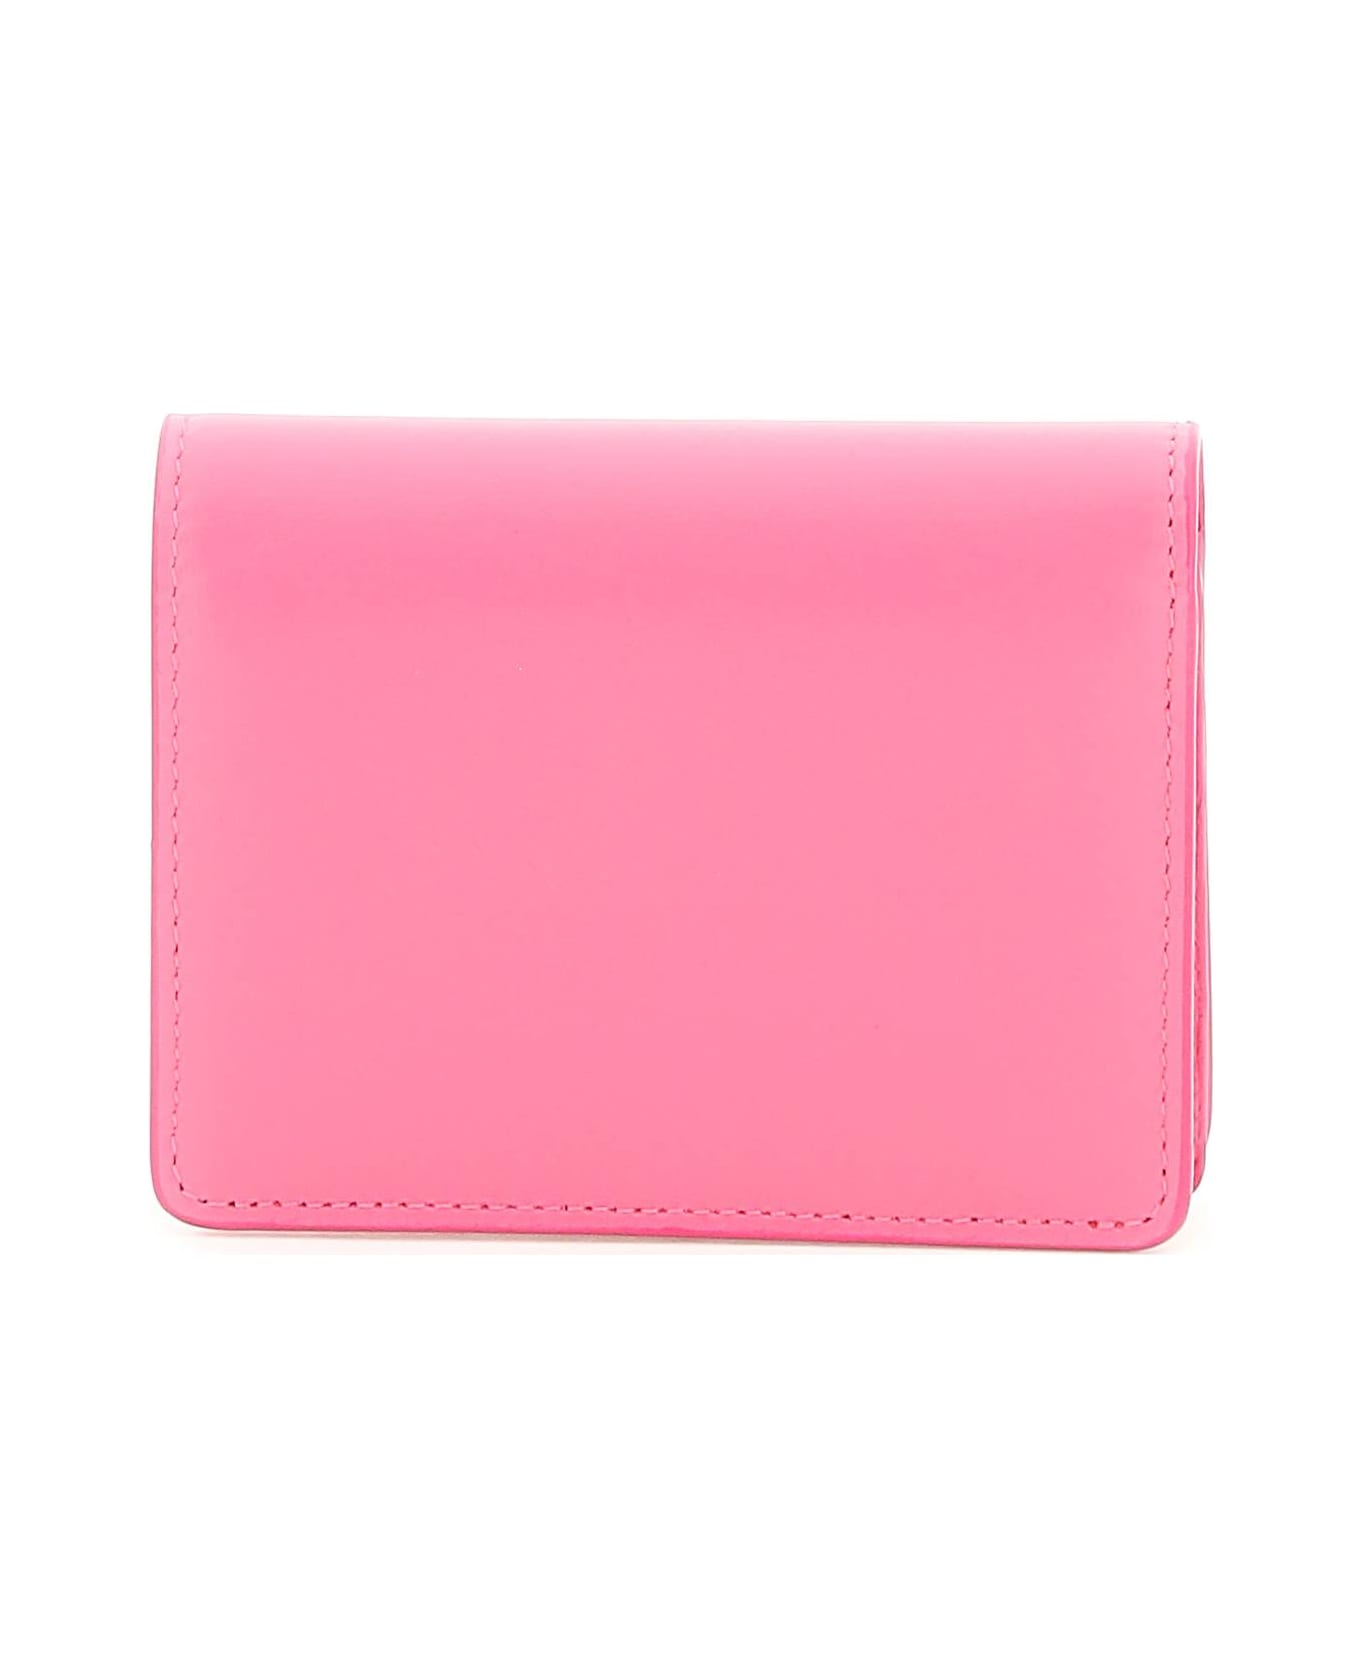 Dolce & Gabbana Leather Wallet - Fuchsia 財布